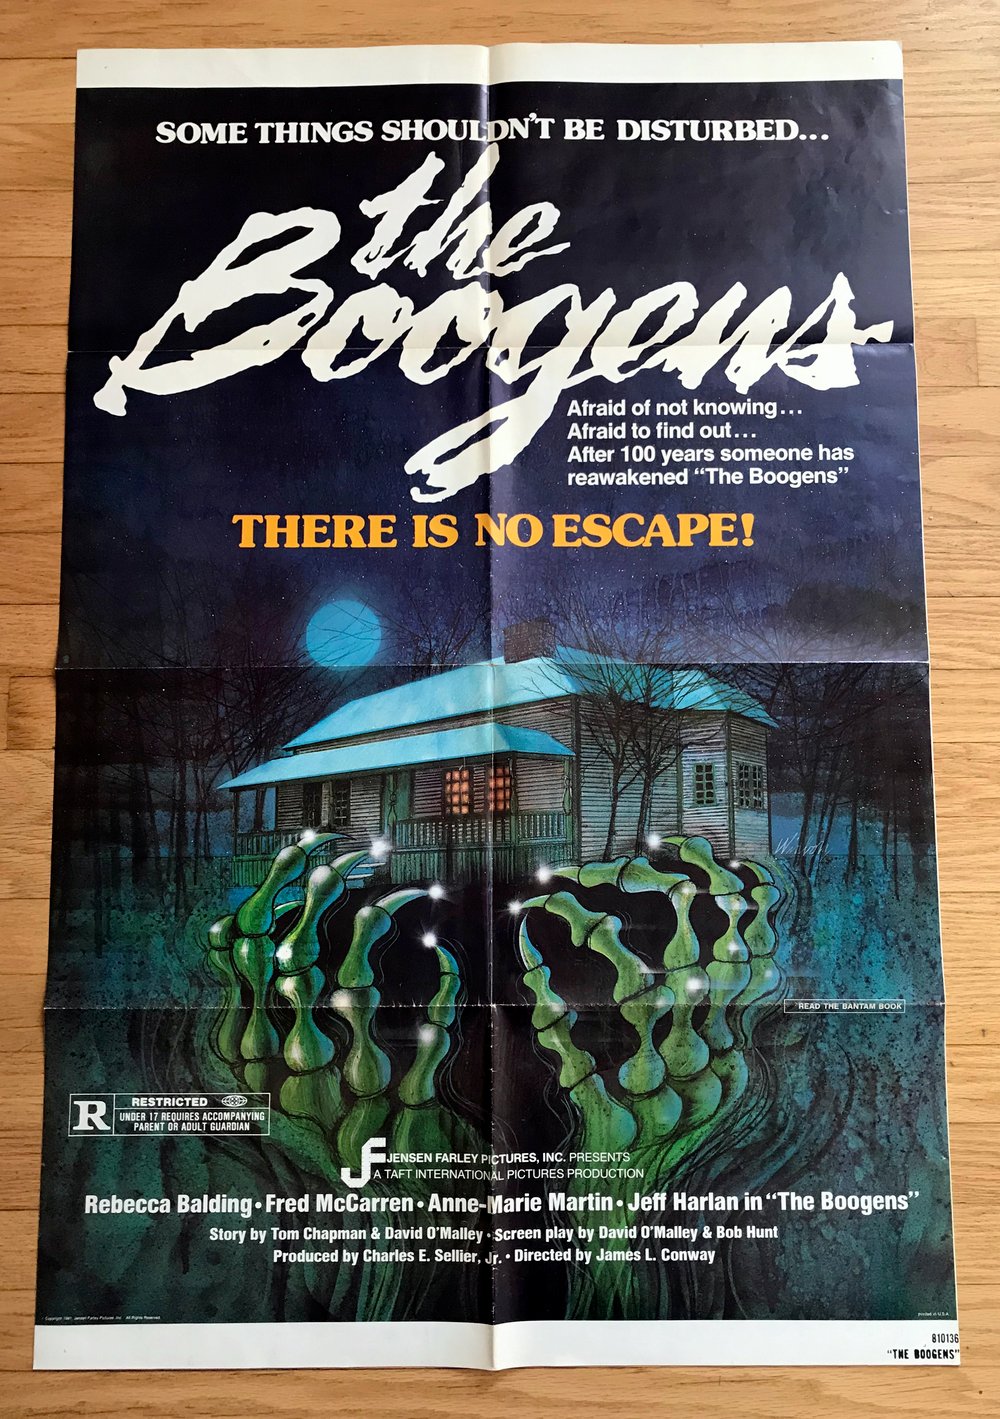 1981 THE BOOGENS Original U.S. One Sheet Movie Poster